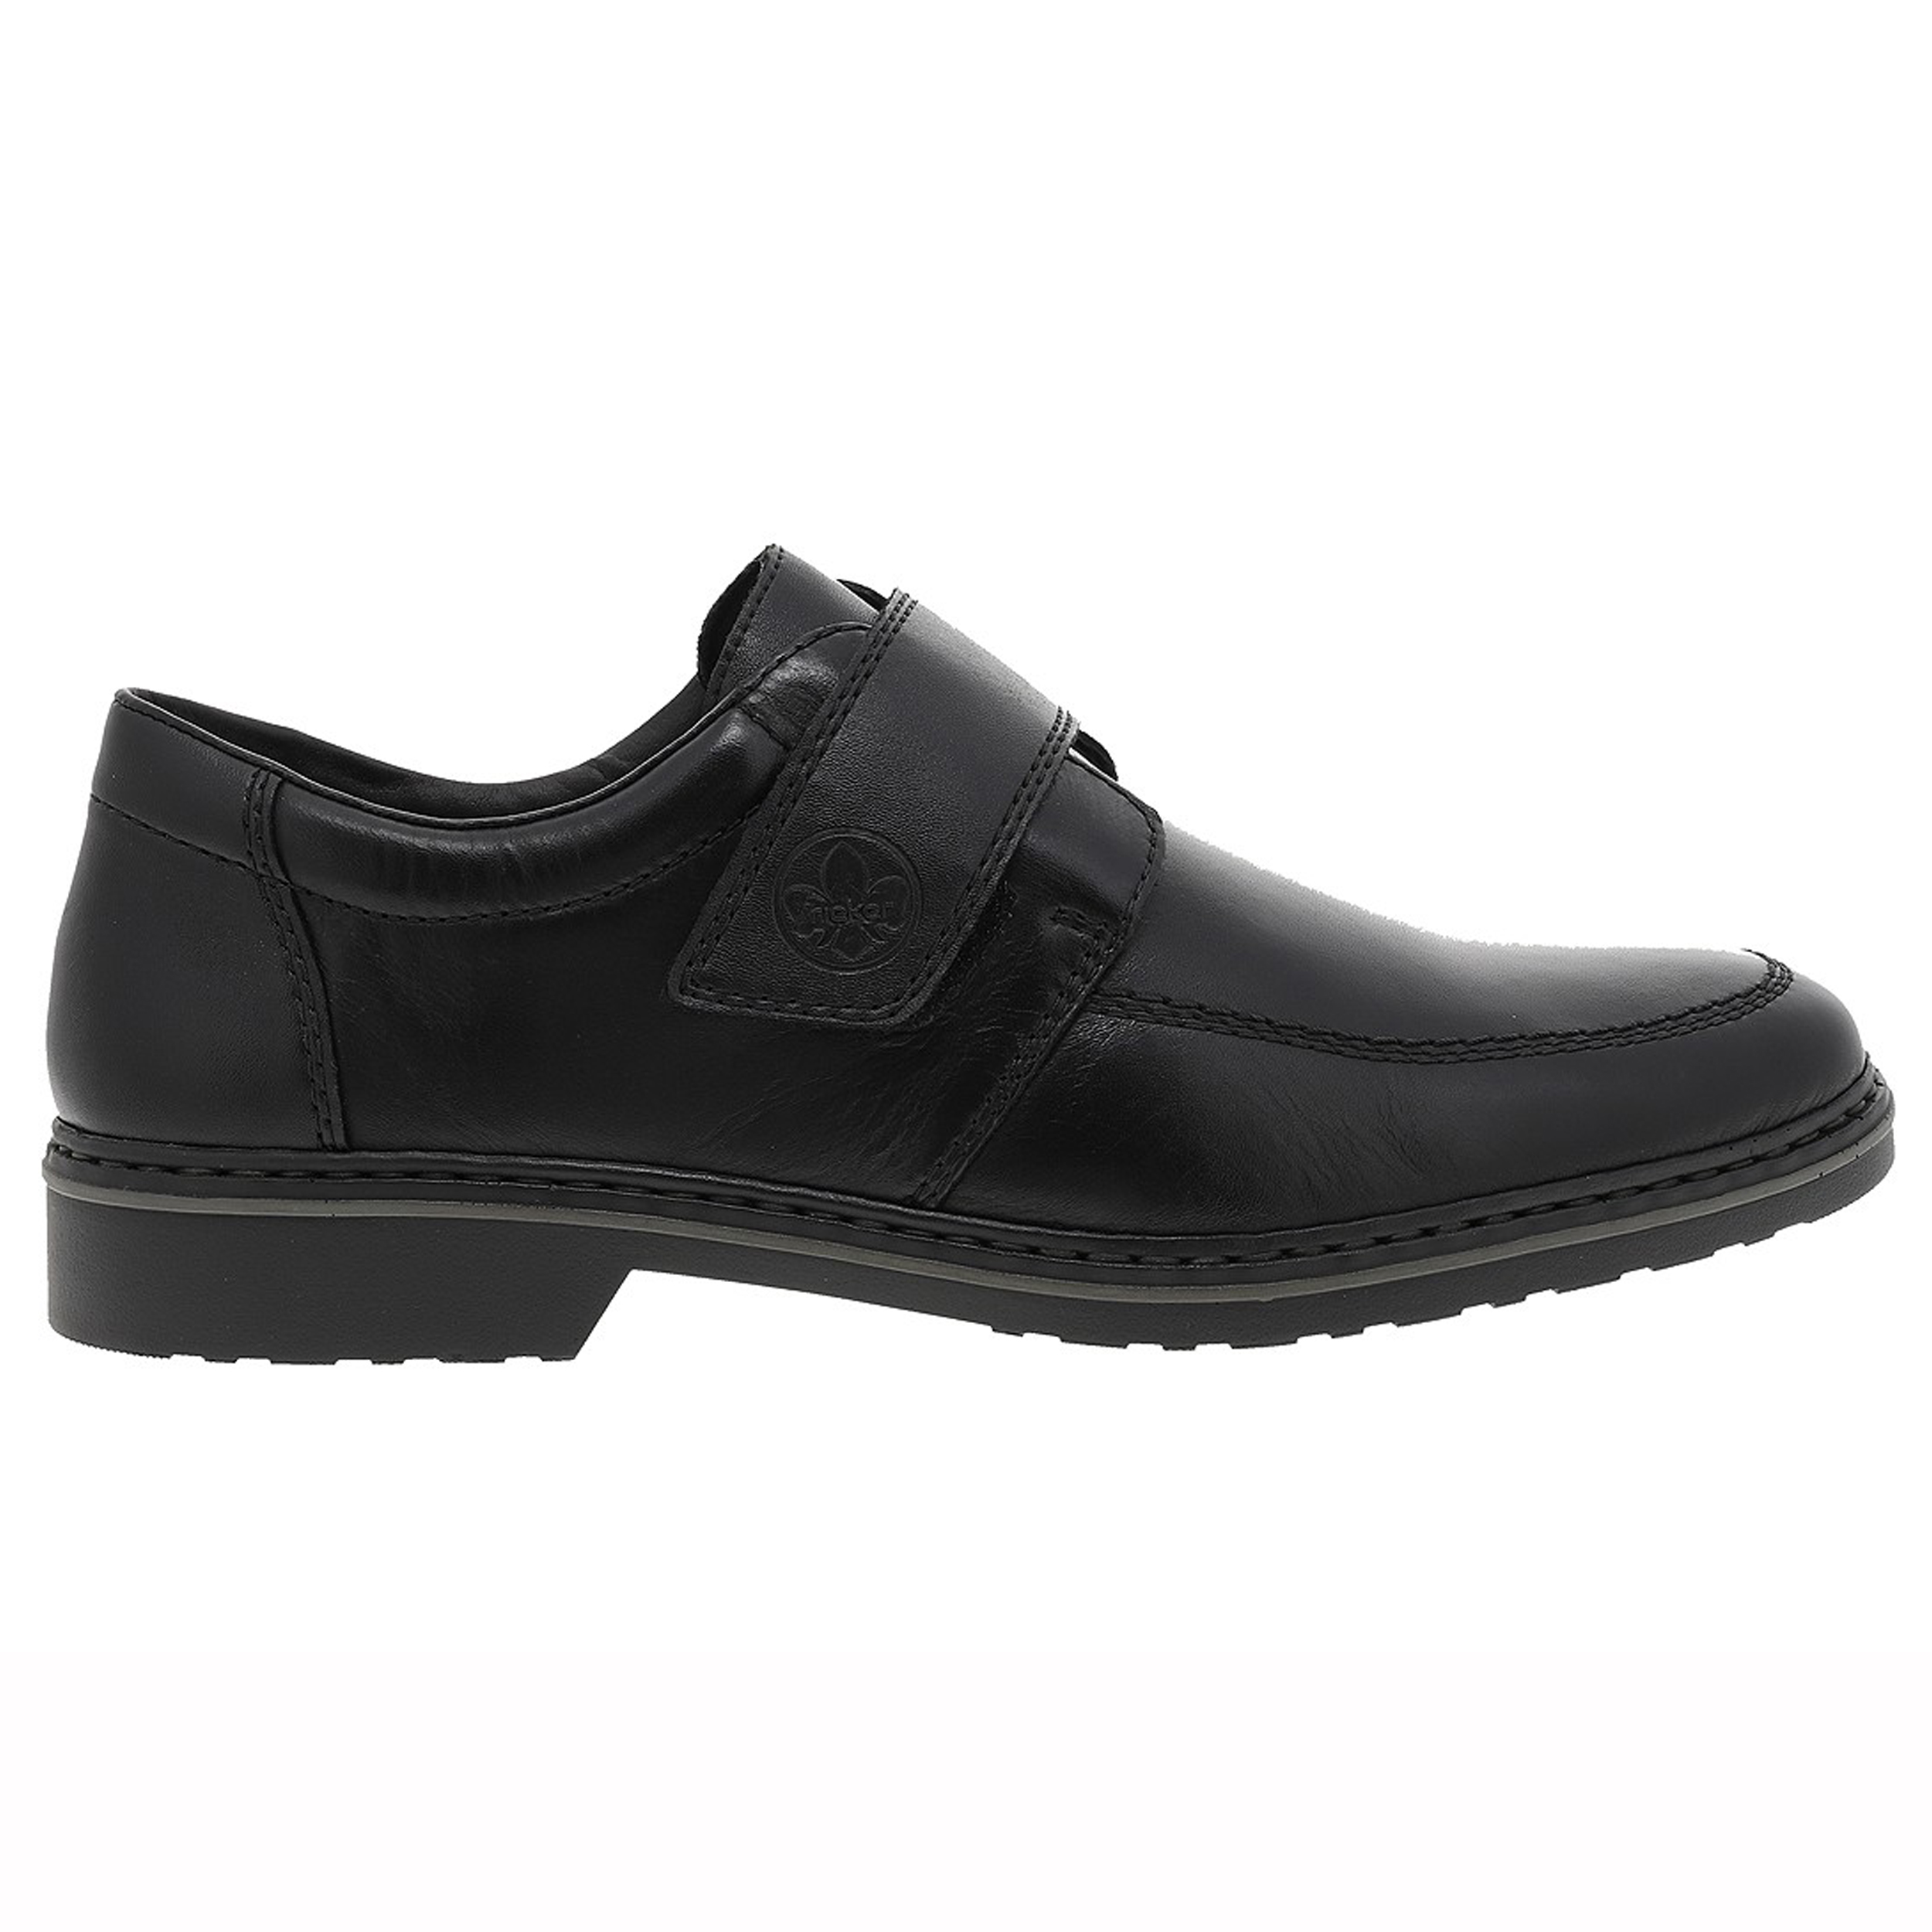 Chaussures de ville Rieker en cuir lisse noir. - Cuir  - Noir - Doublure en cuir noir